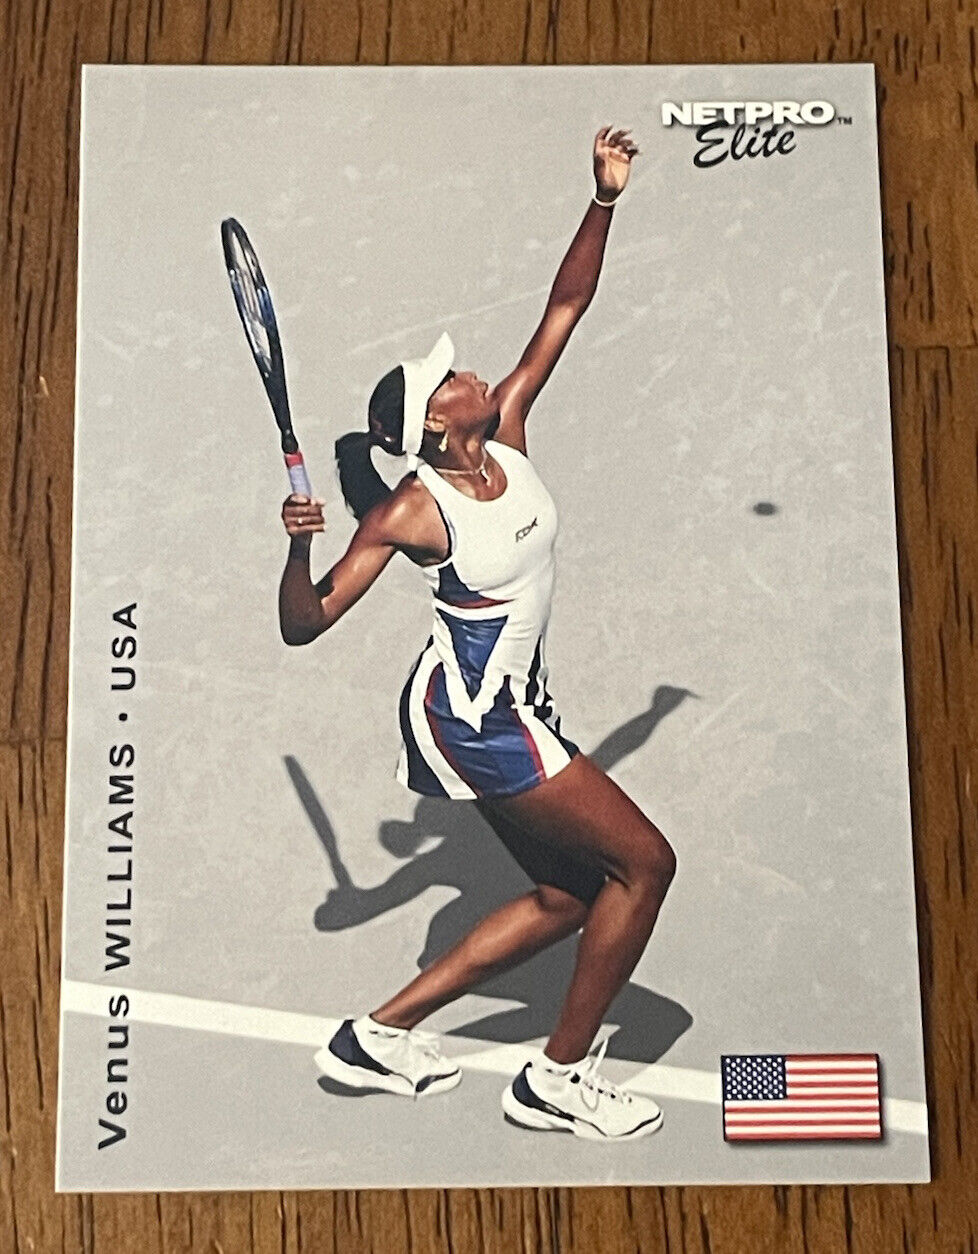 2003 NetPro Elite /2000 Tennis Venus Williams Rookie RC Card #6